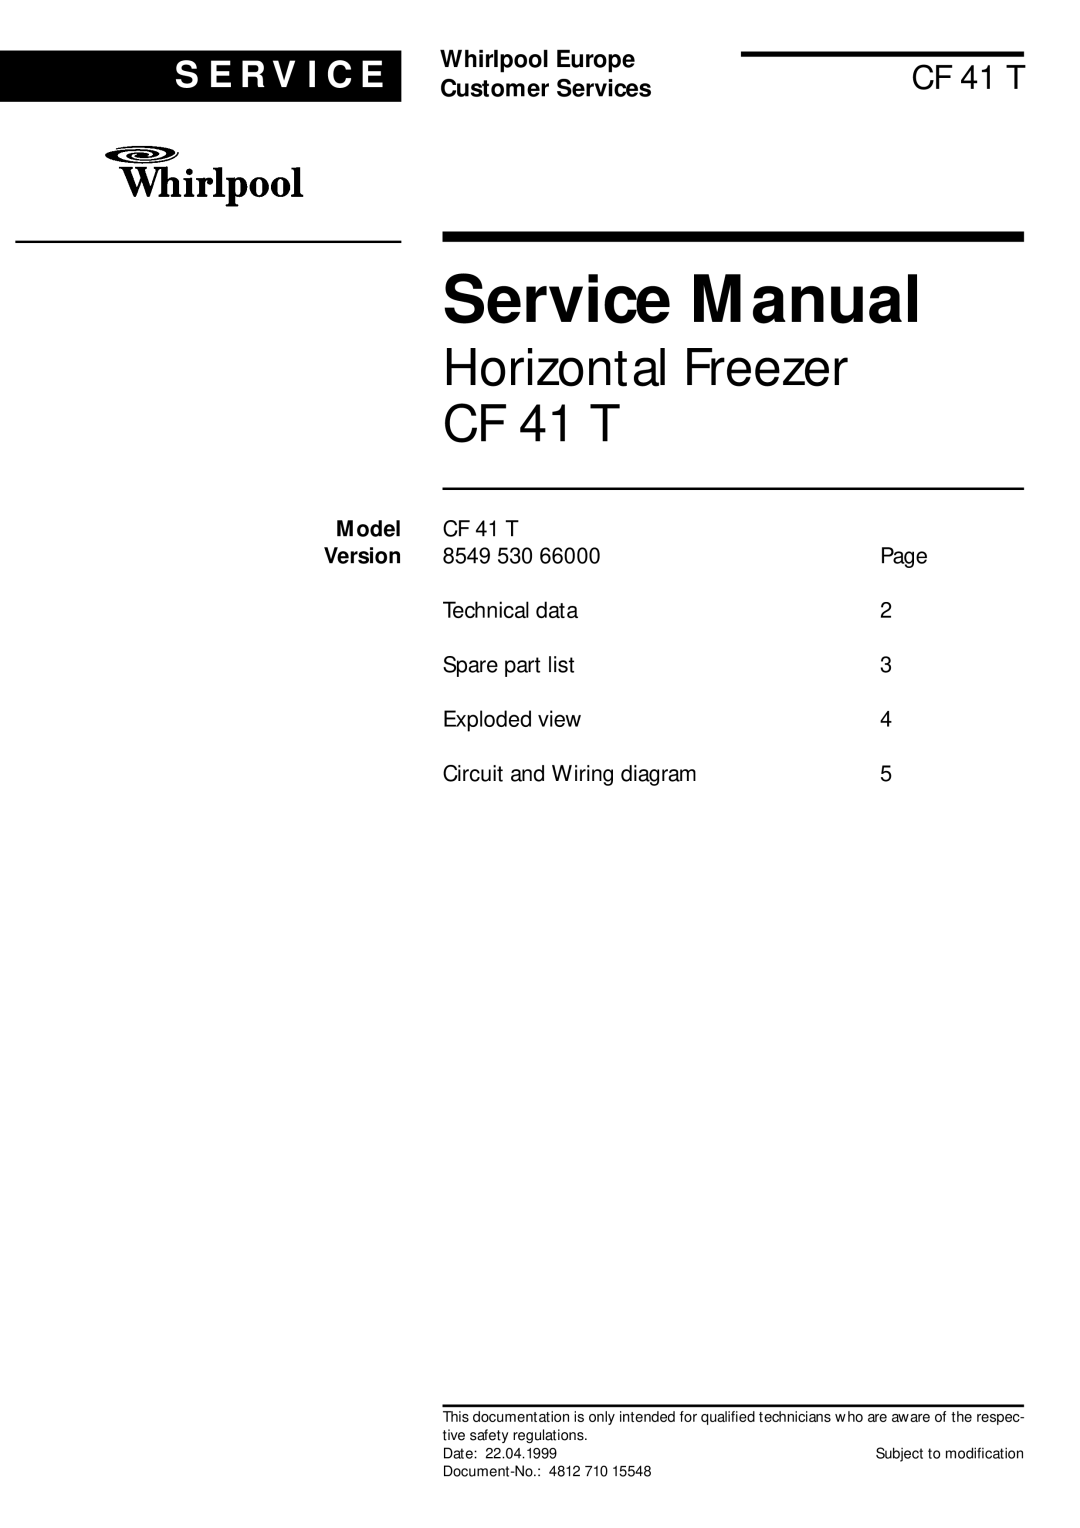 Whirlpool service manual Model, Horizontal Freezer CF 41 T, S E R V I C E, Whirlpool Europe, Customer Services 